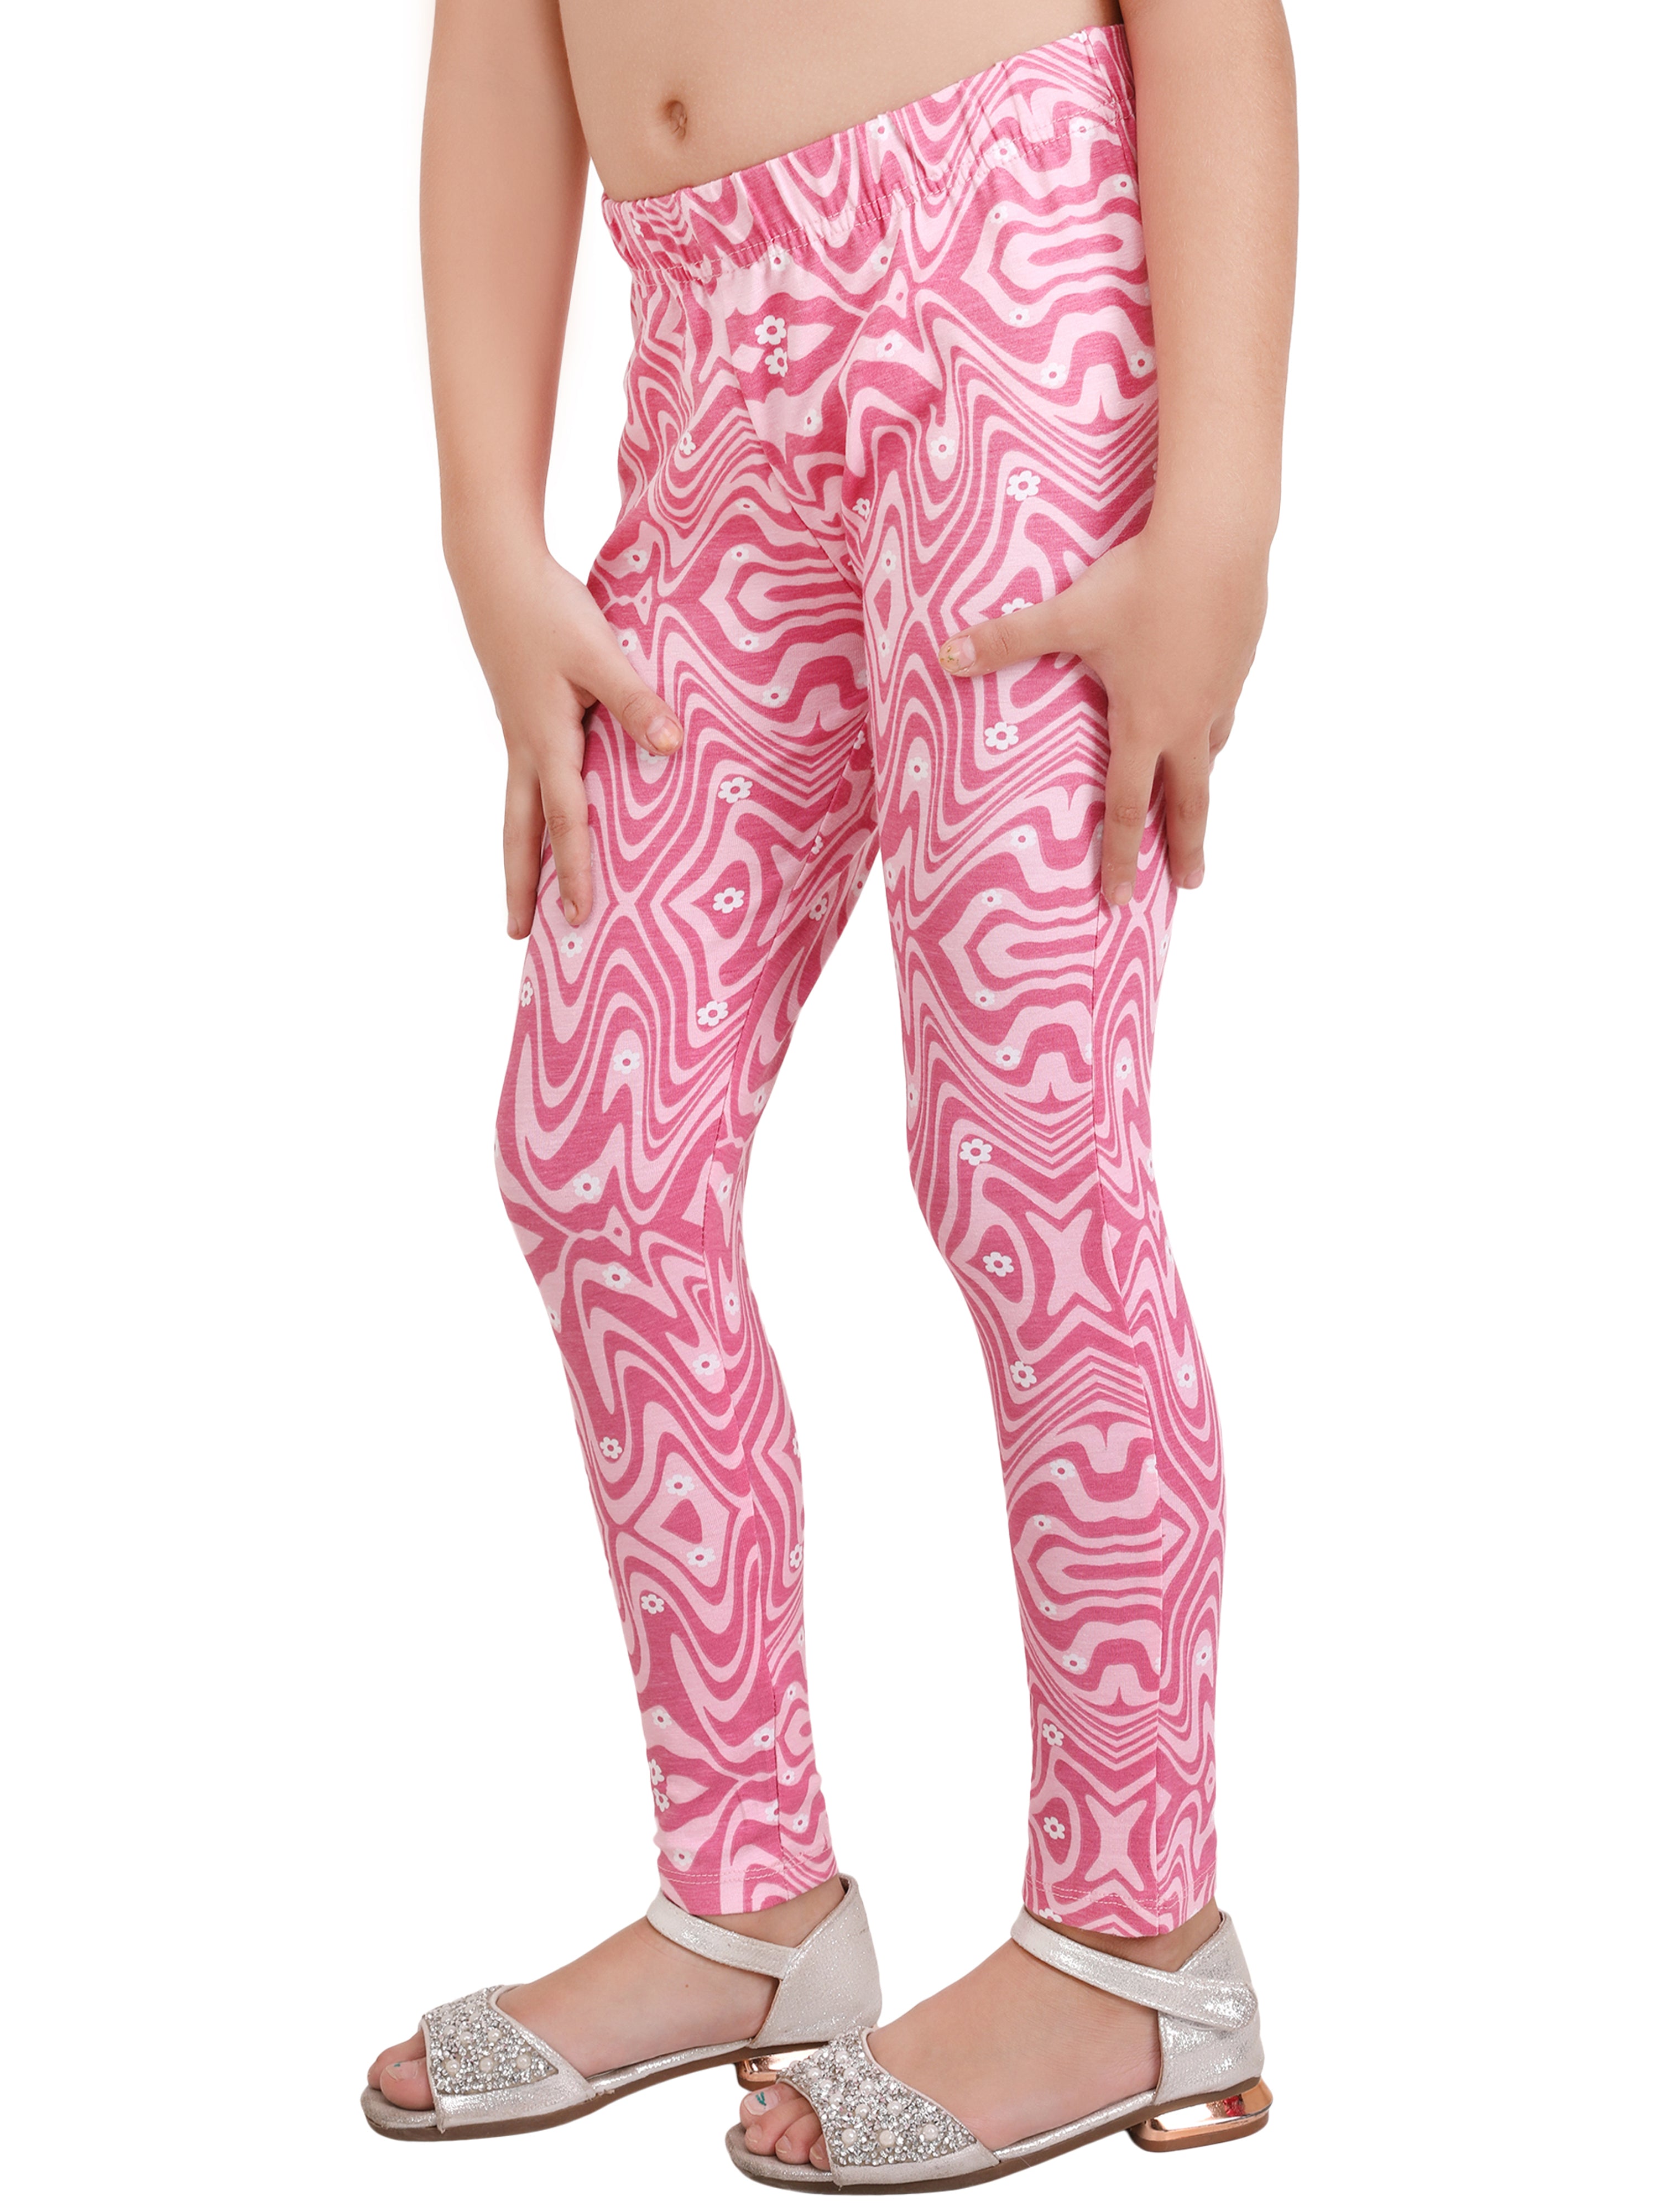 Sheecute Winter Warm Girls leggings Thick Fleece Lined Kids Printing Pants  SCW6101 - AliExpress